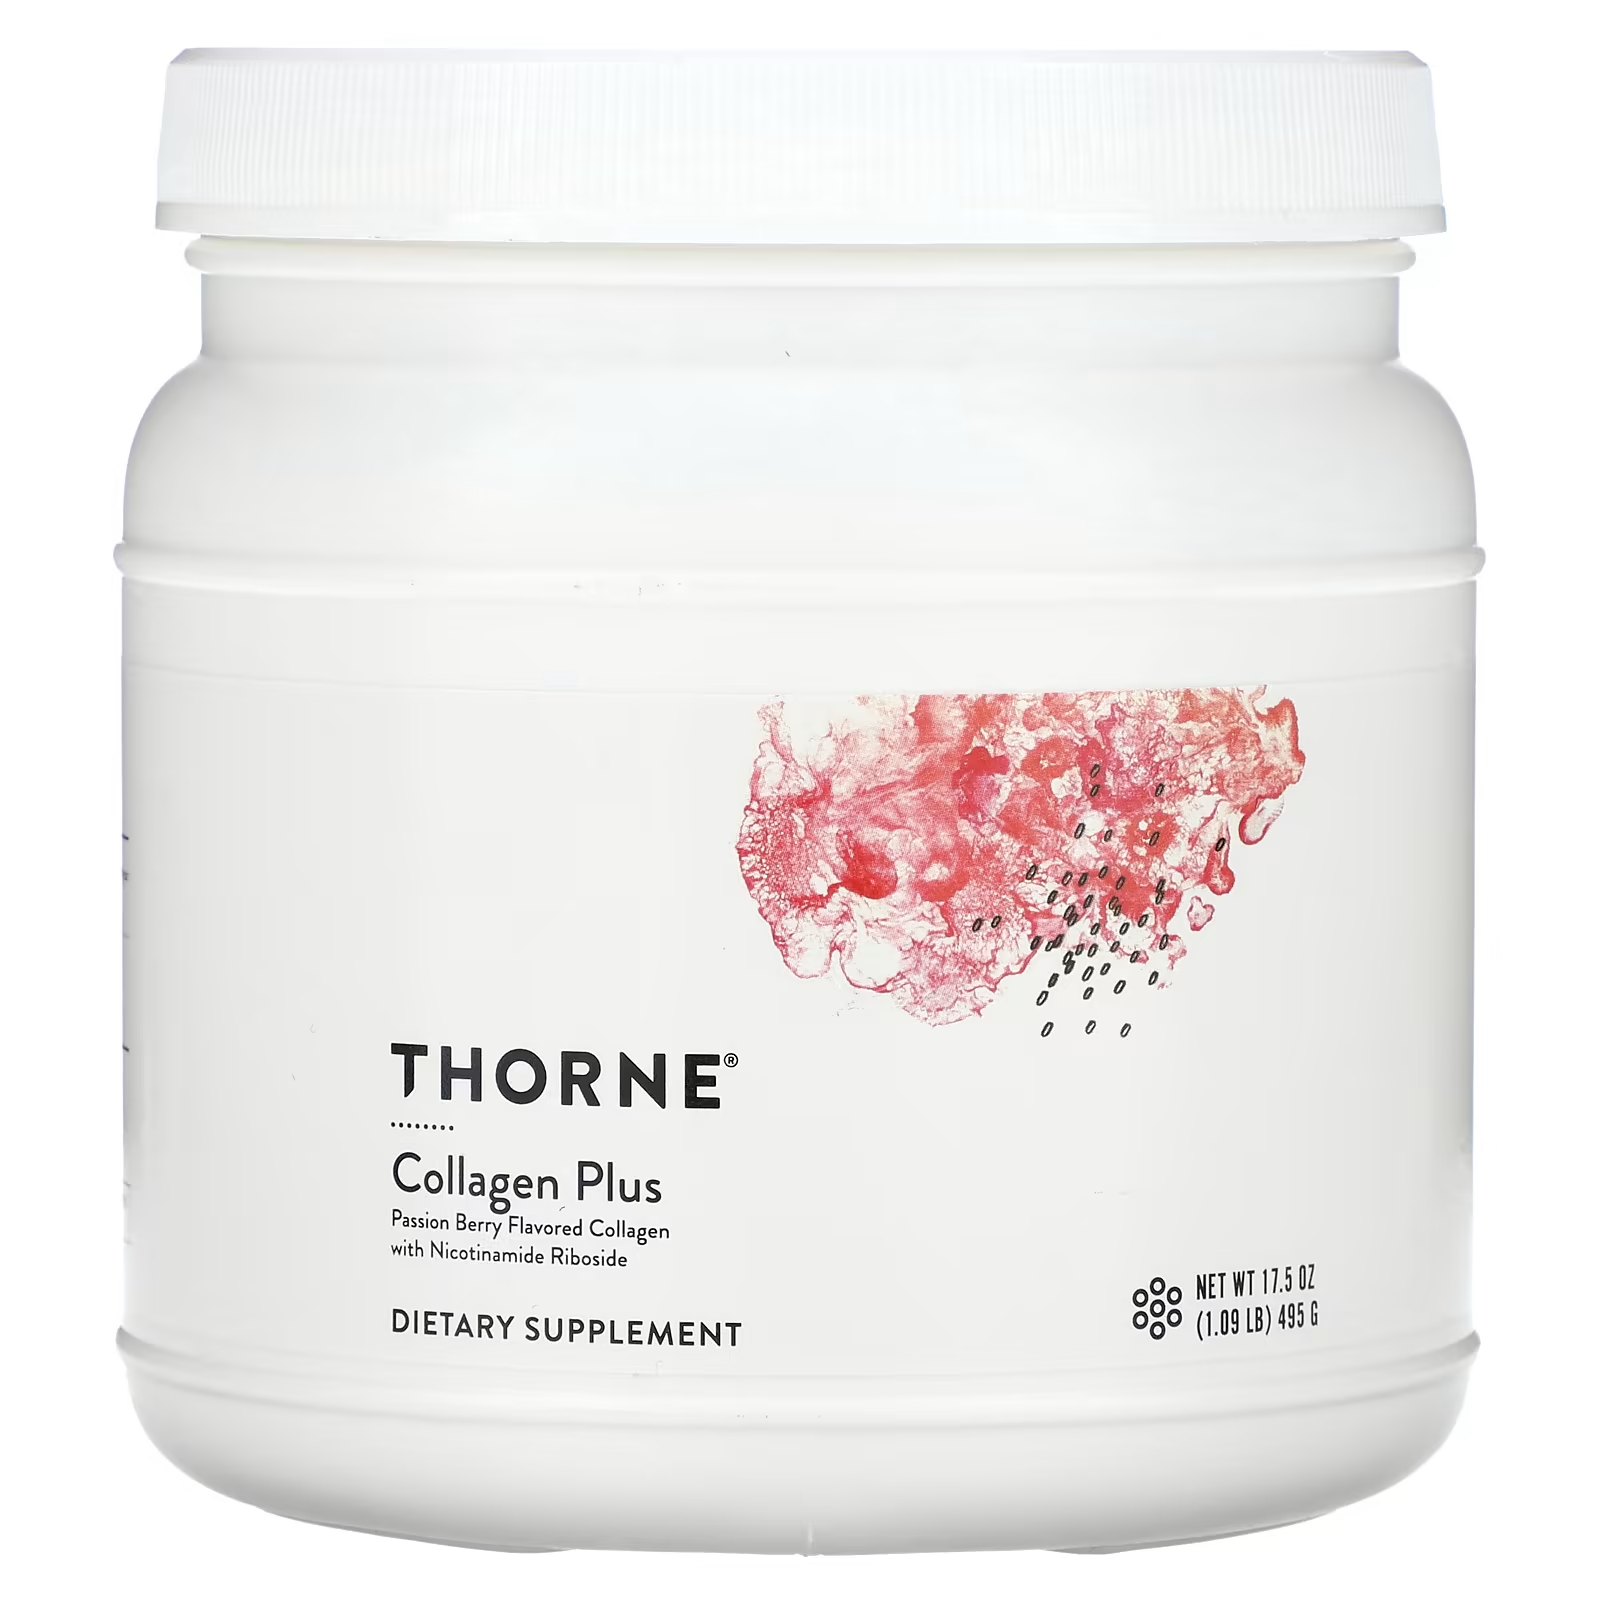 Пищевая добавка Thorne Collagen Plus Passion Berry, 495 г collagen plus добавка с коллагеном маракуйя thorne research 495 г